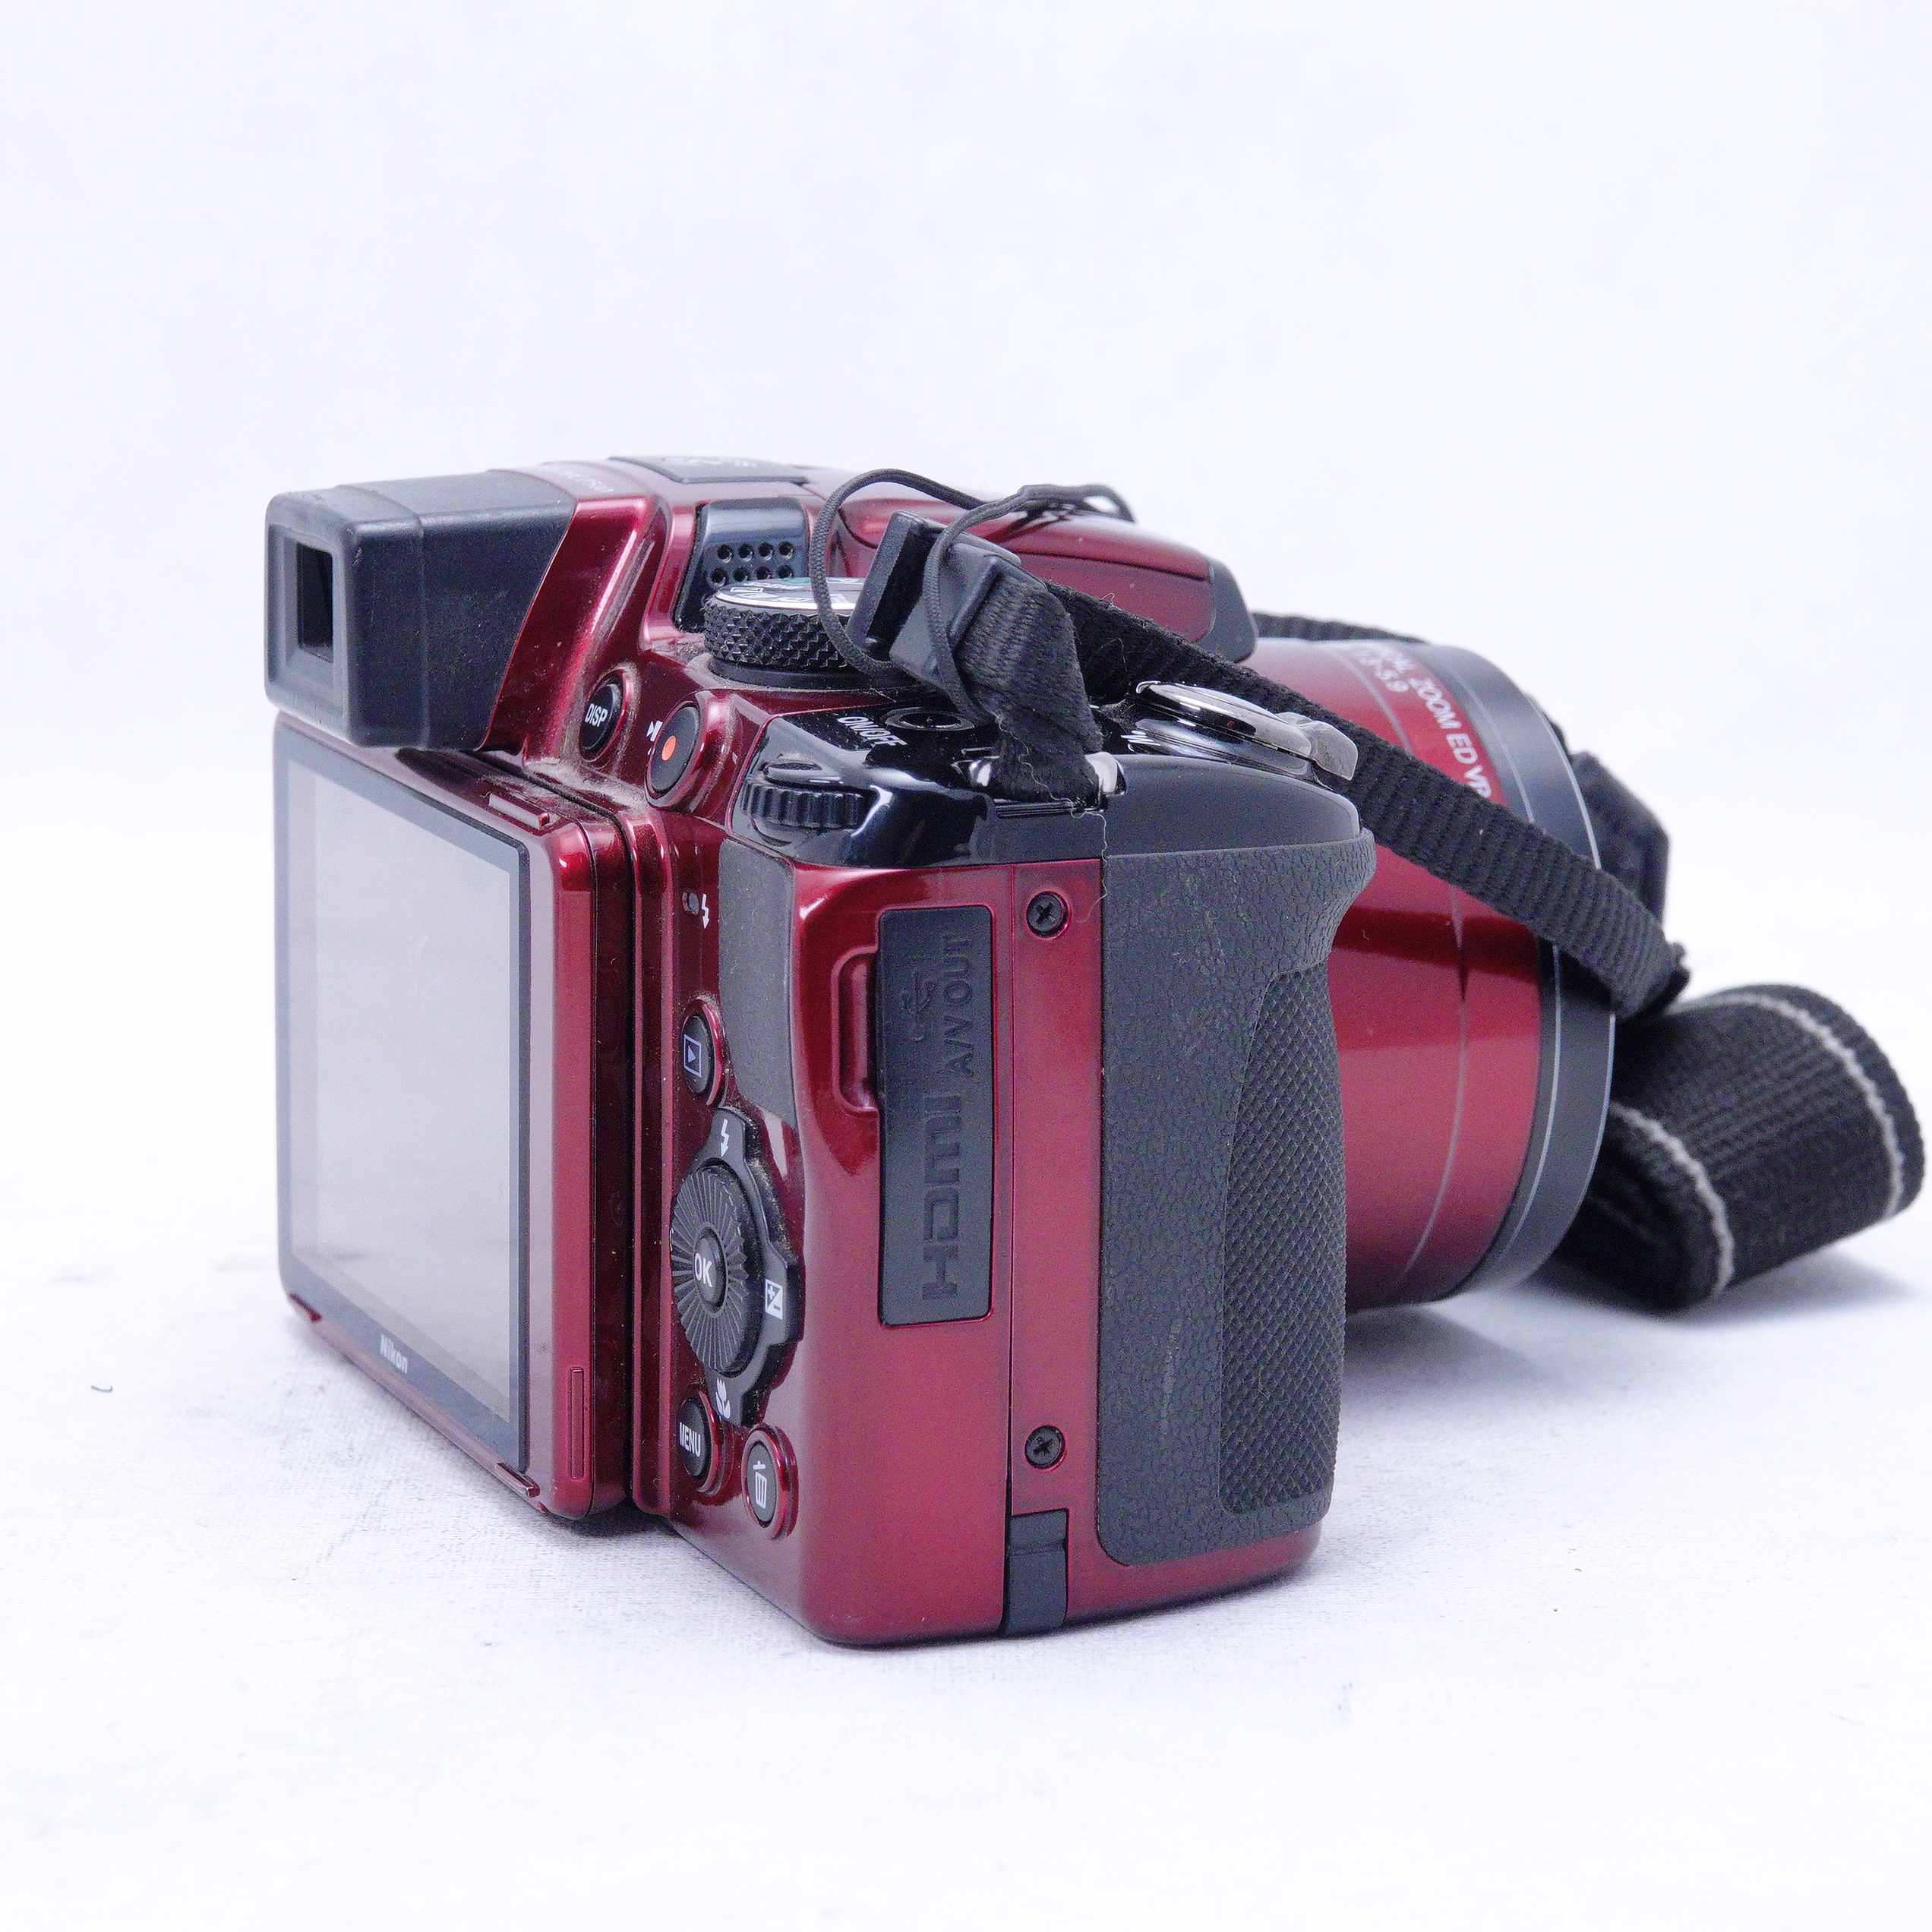 Nikon COOLPIX P510 (roja) - Usado